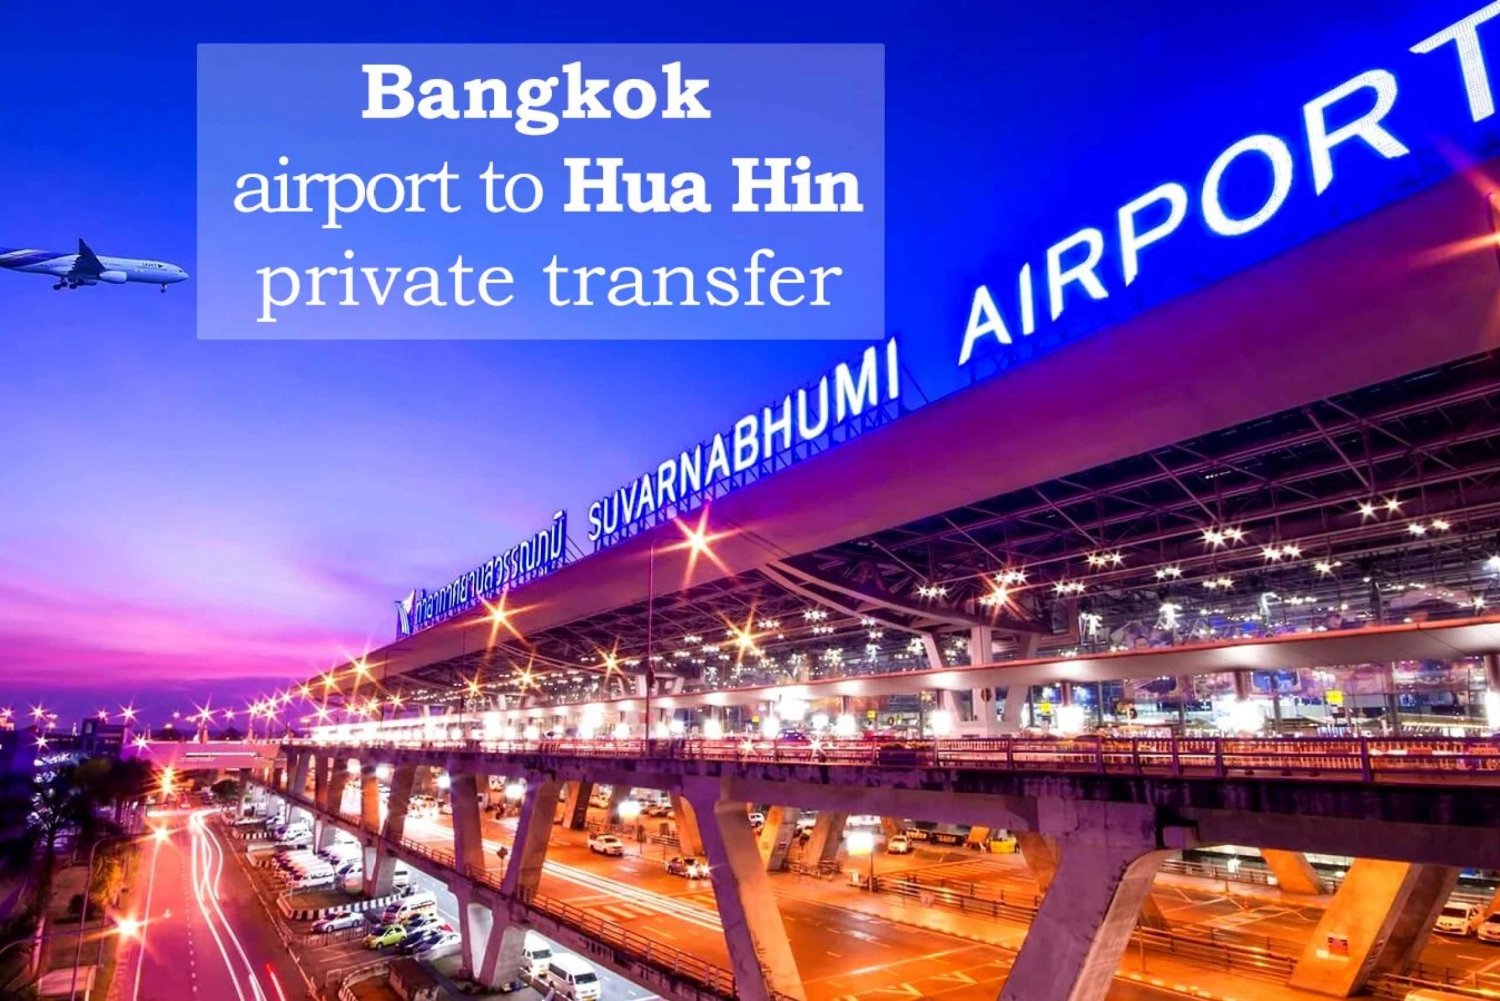 Bangkokissa: BKK Airport from/to Hua Hin Yksityinen kuljetus: BKK Airport from/to Hua Hin Yksityinen kuljetus